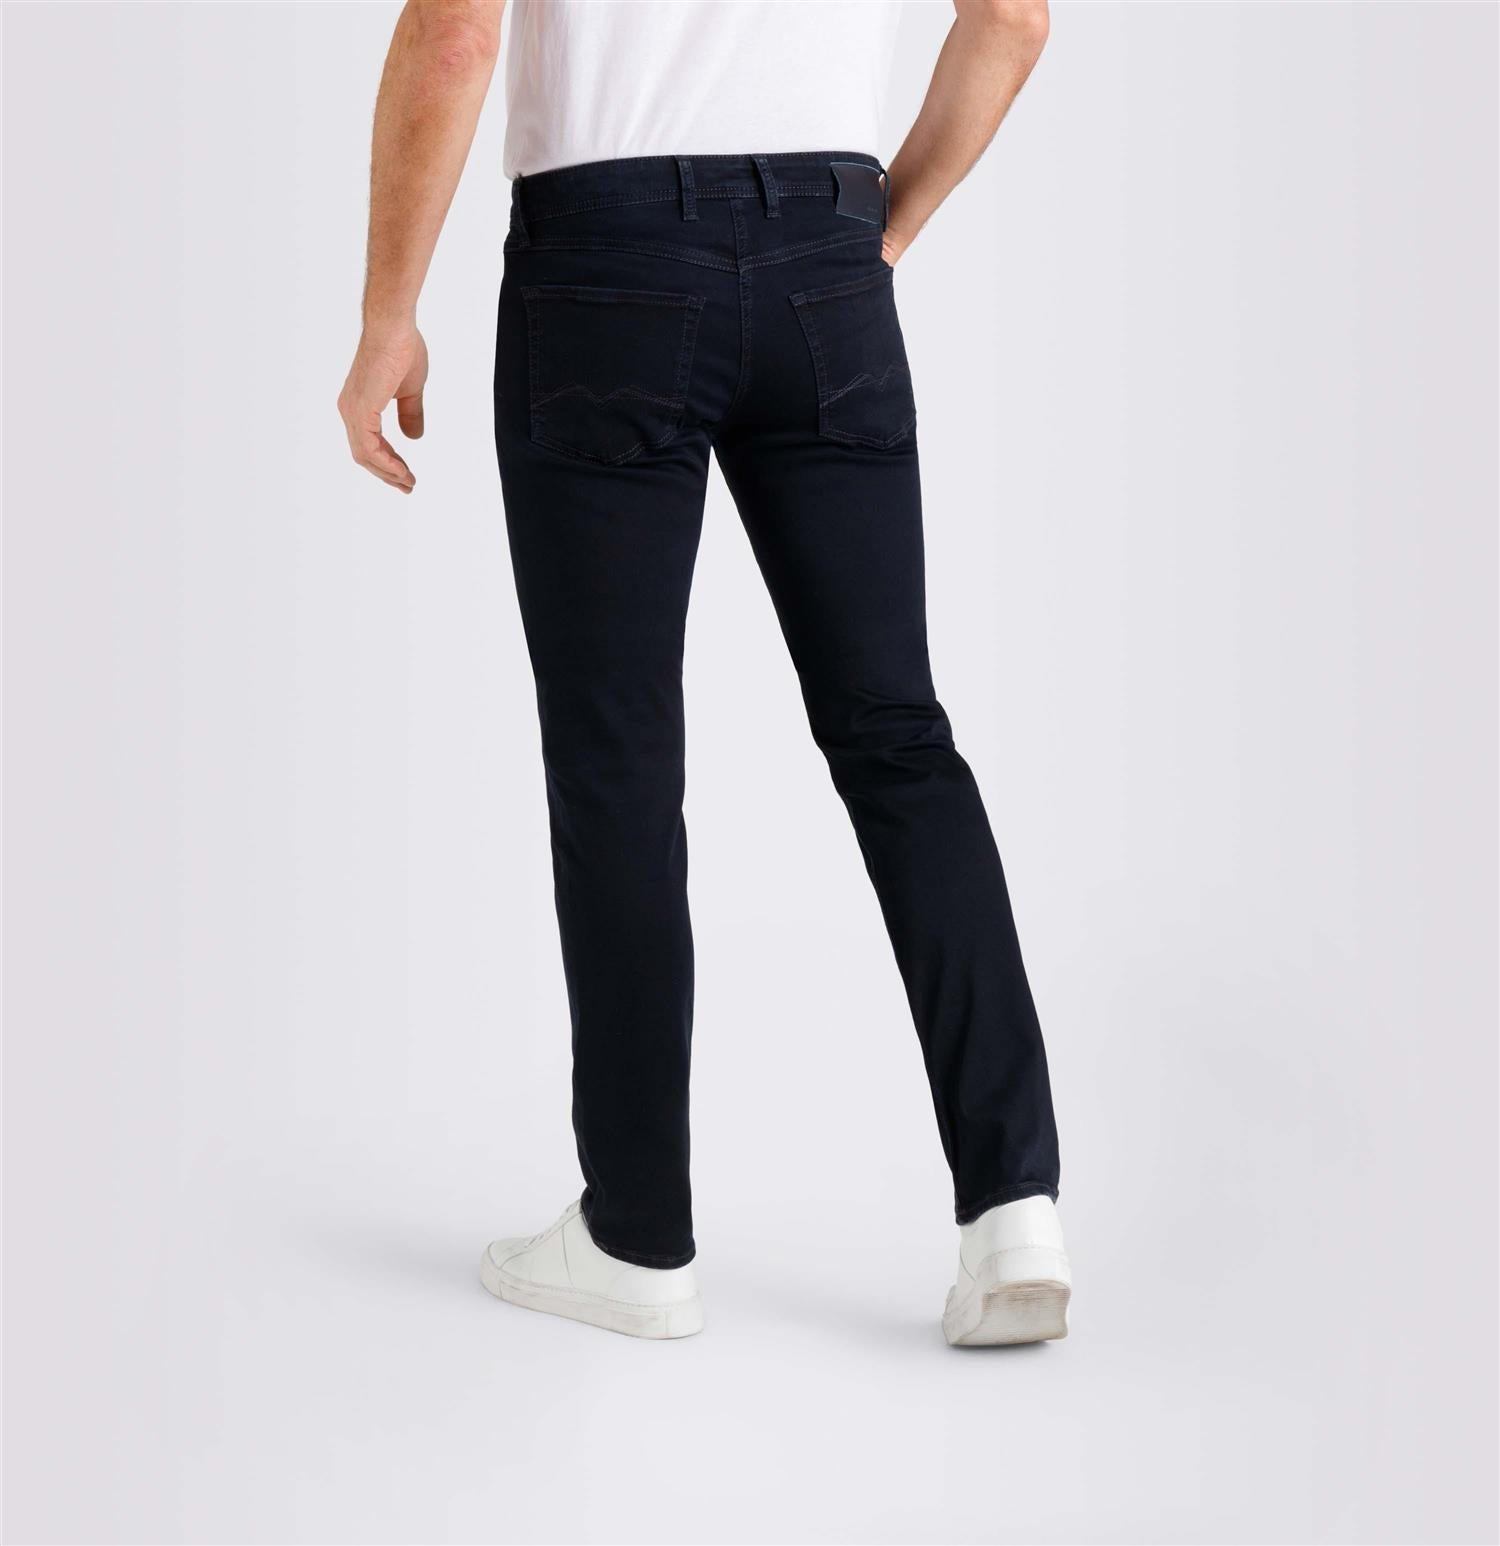 – blueblack Mac Flexx Jeans